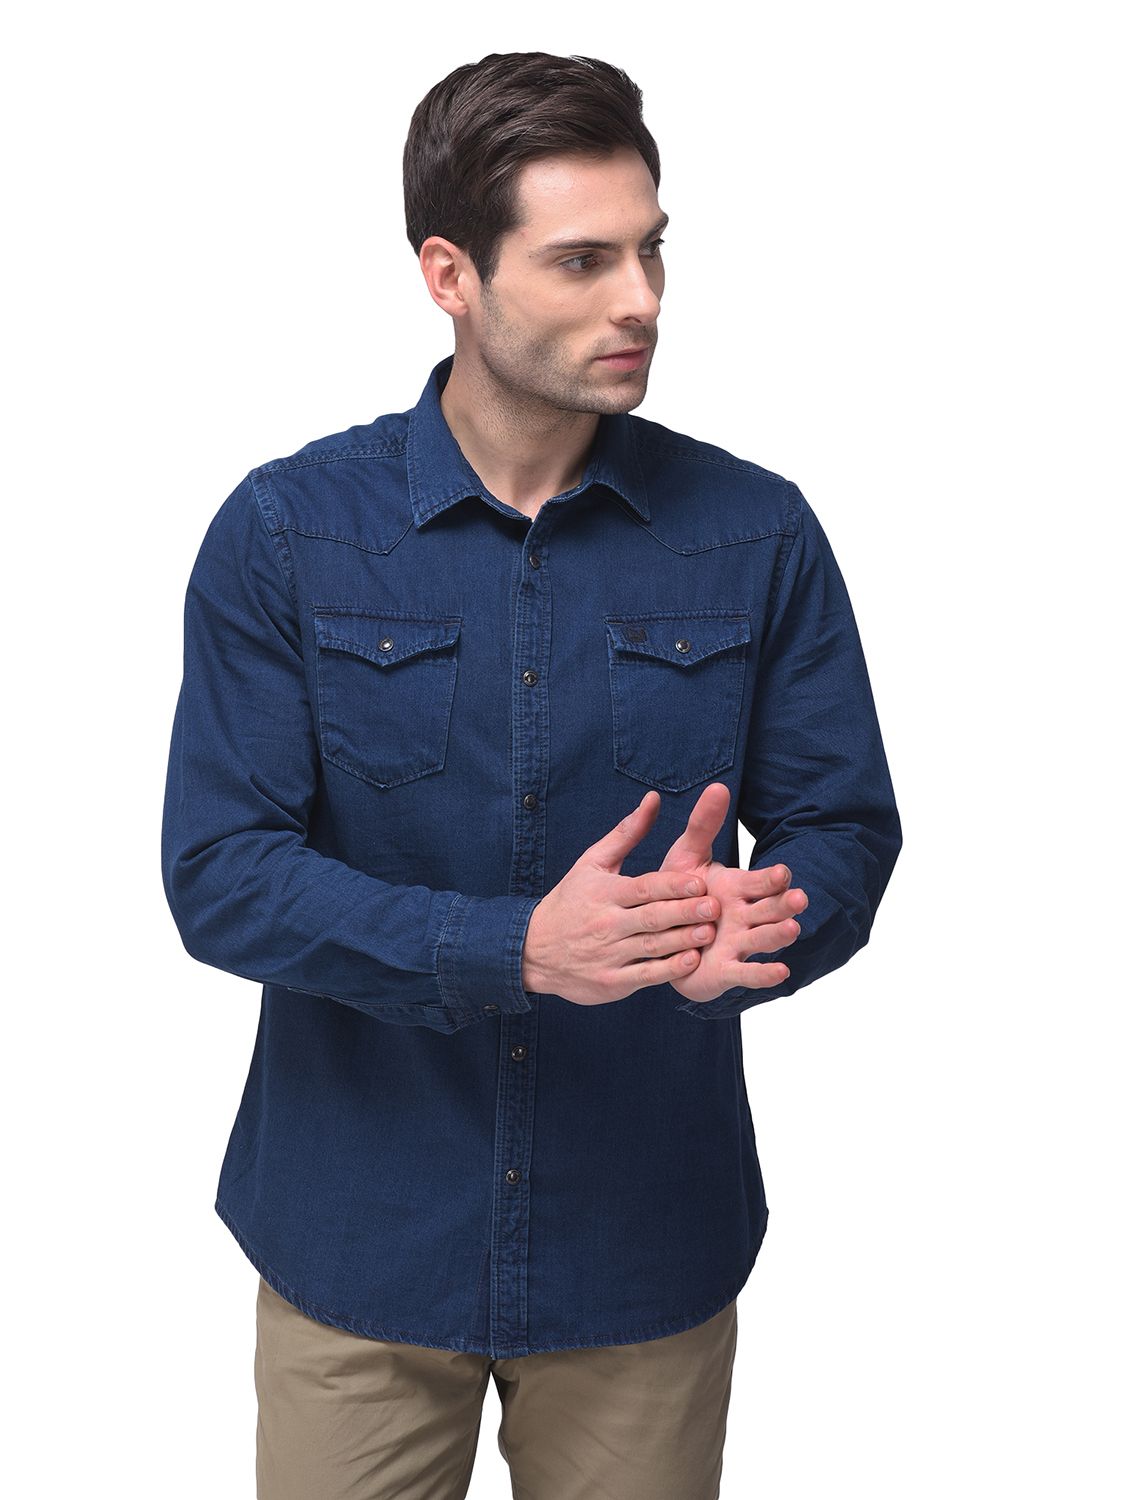 Carbon blue full sleeves shirt